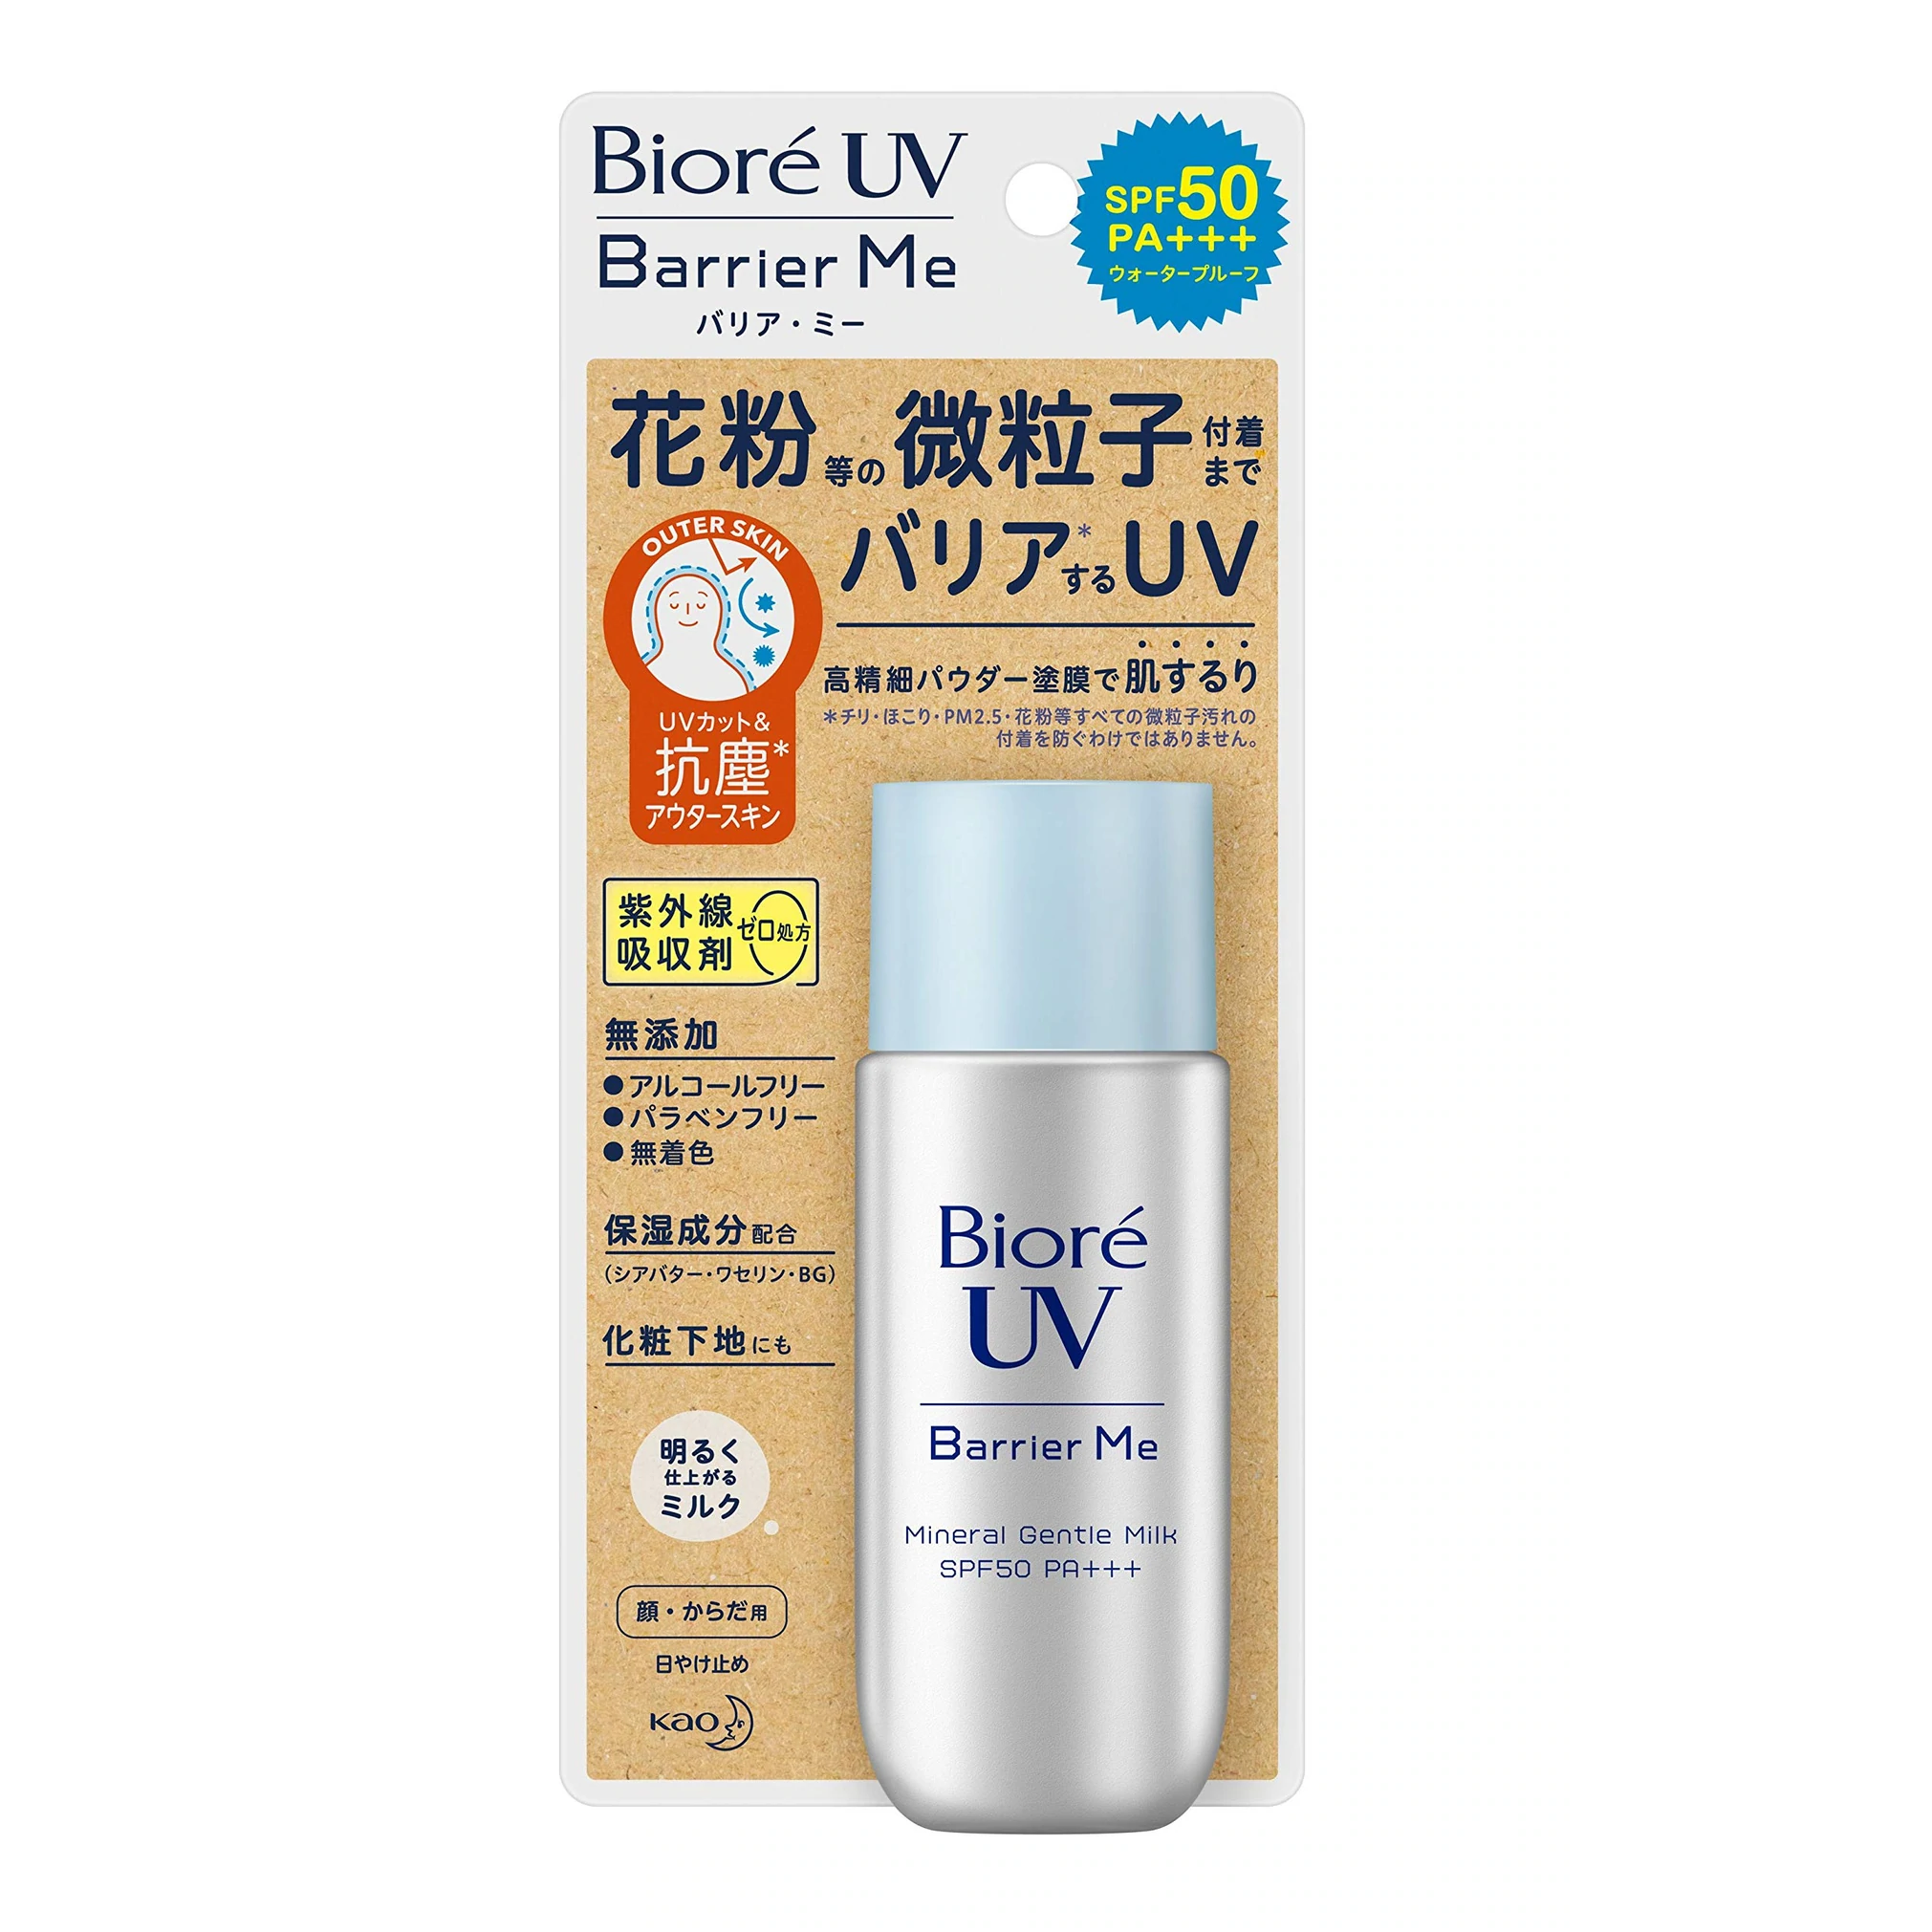 Biore UV Barrier Me Mineral Gentle Milk SPF 50 PA+++ 50ml